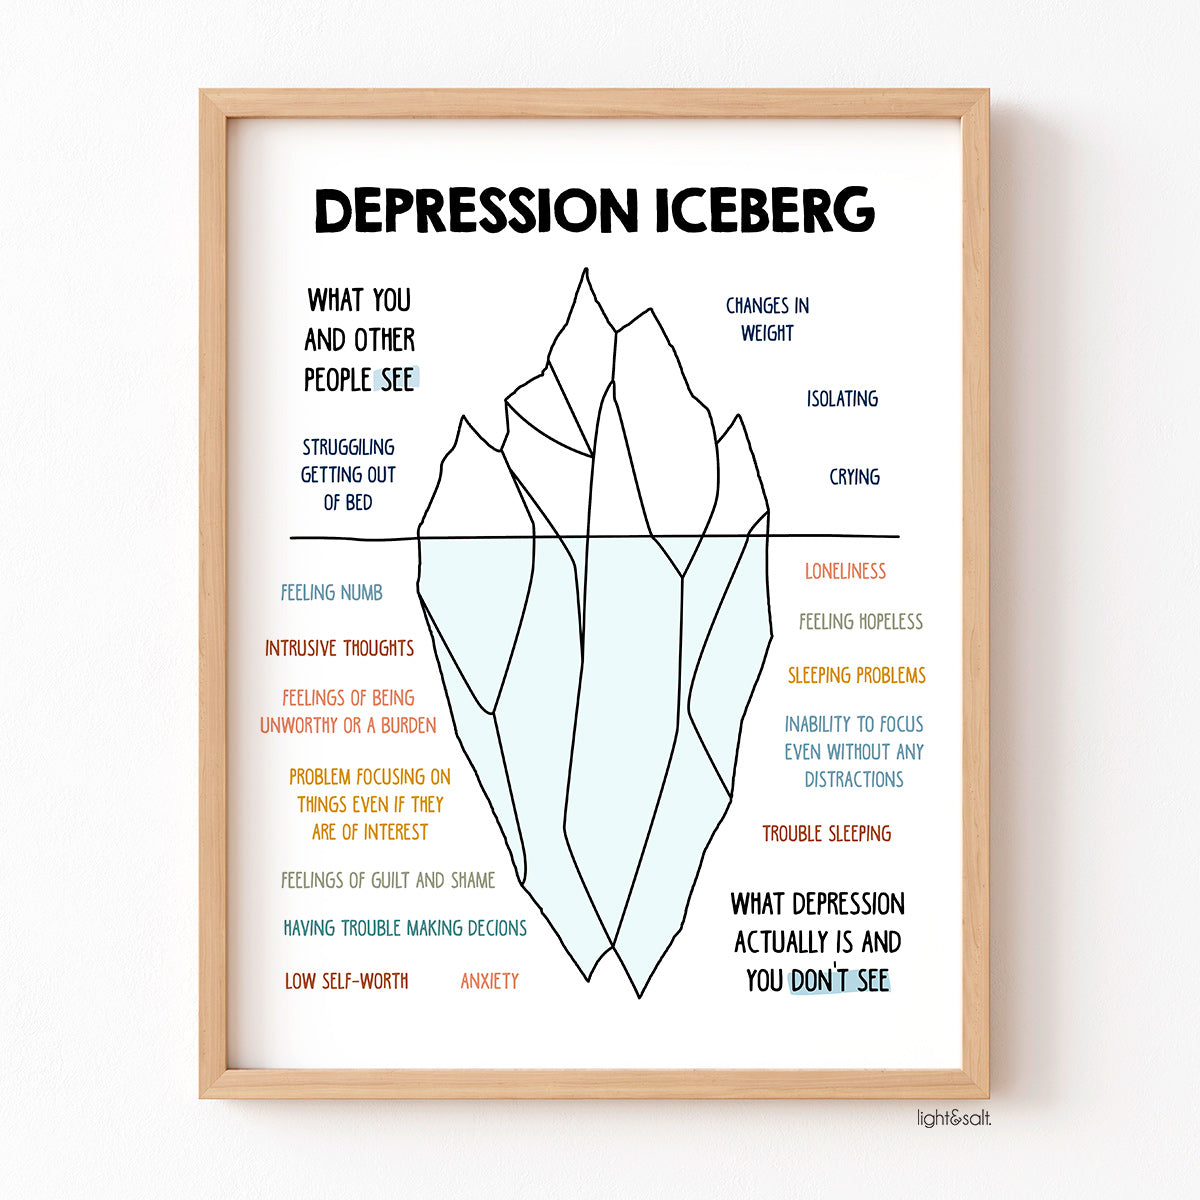 Depression icerberg poster